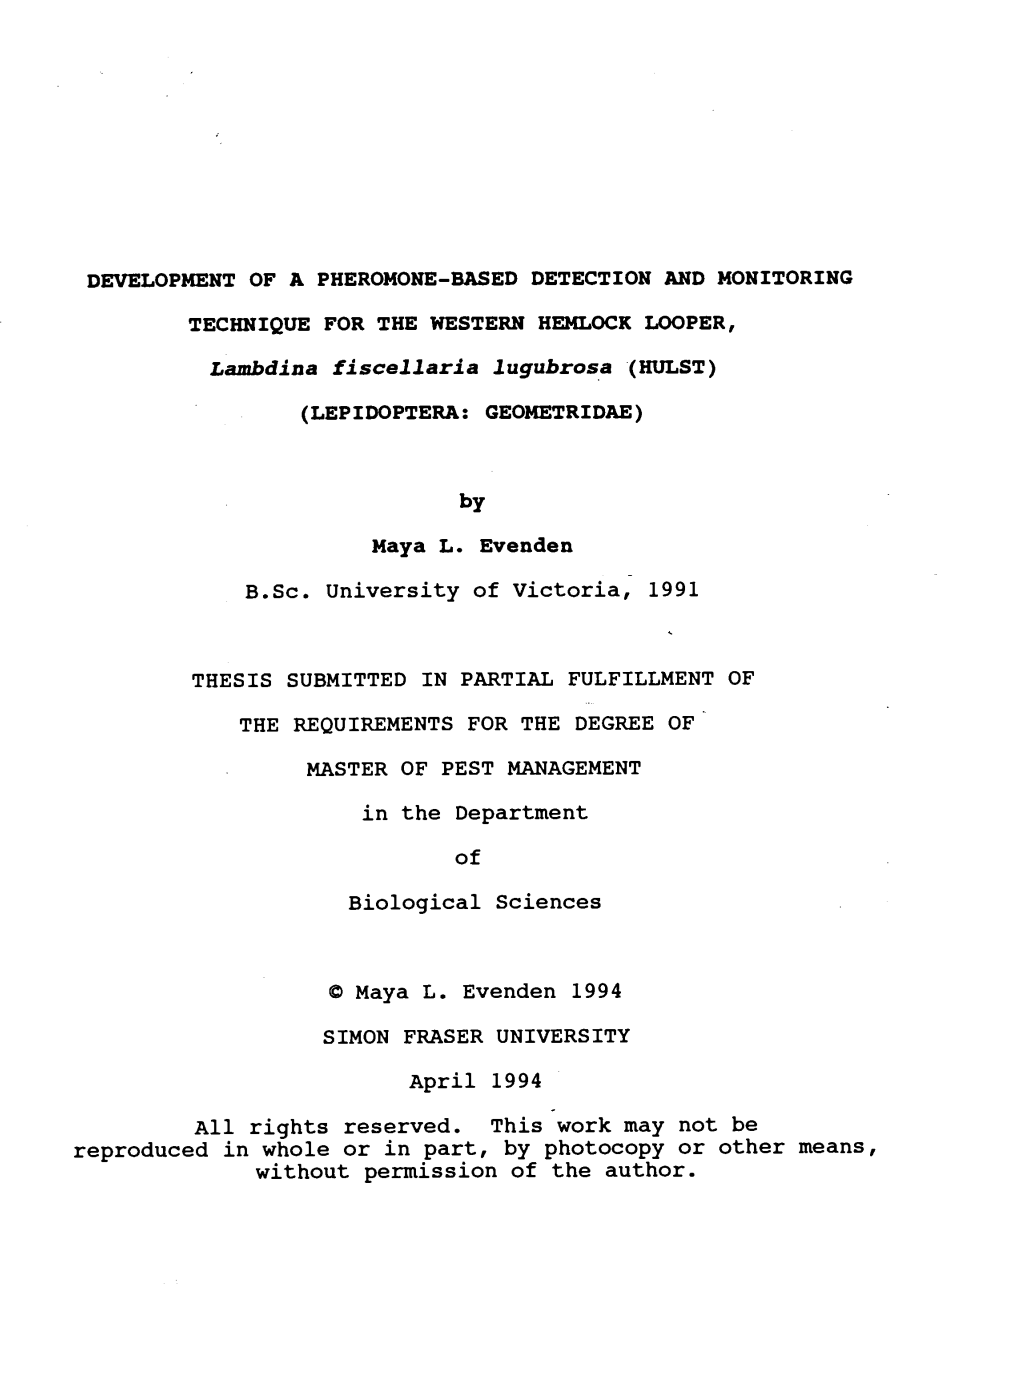 DEVELOPMENT of a PHEROMONE-BASED DETECTION and MONITORING TECHNIQUE for the WESTERN HEMLOCK LOOPER, Lambdina Fiscellaria Lugubrosa (HULST) (LEPIDOPTERA: GEOMETRIDAE)